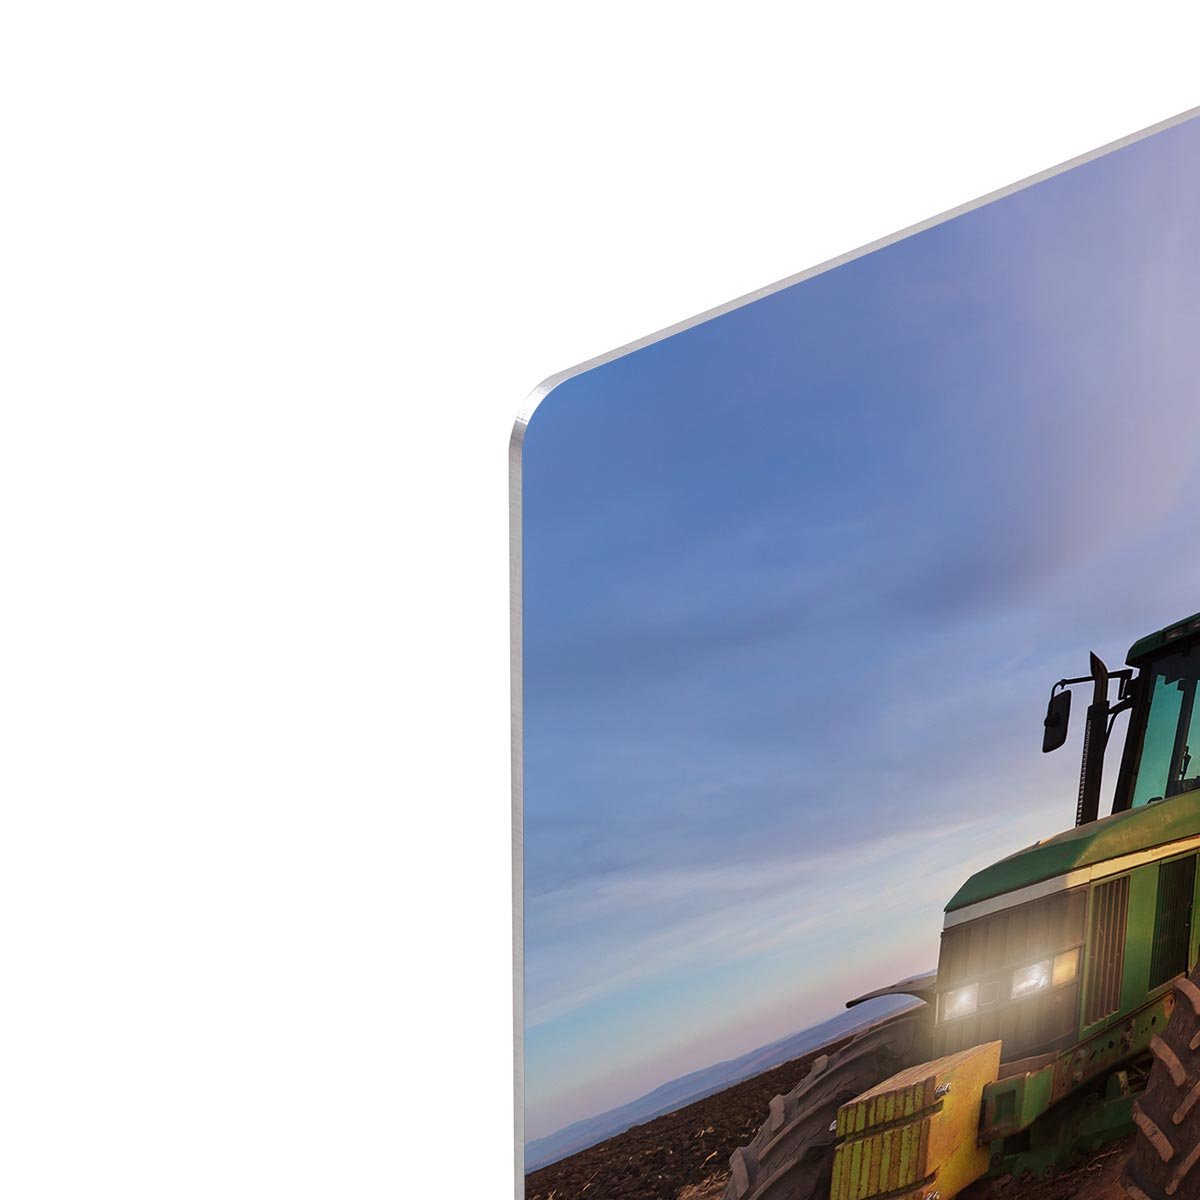 Green tractor HD Metal Print